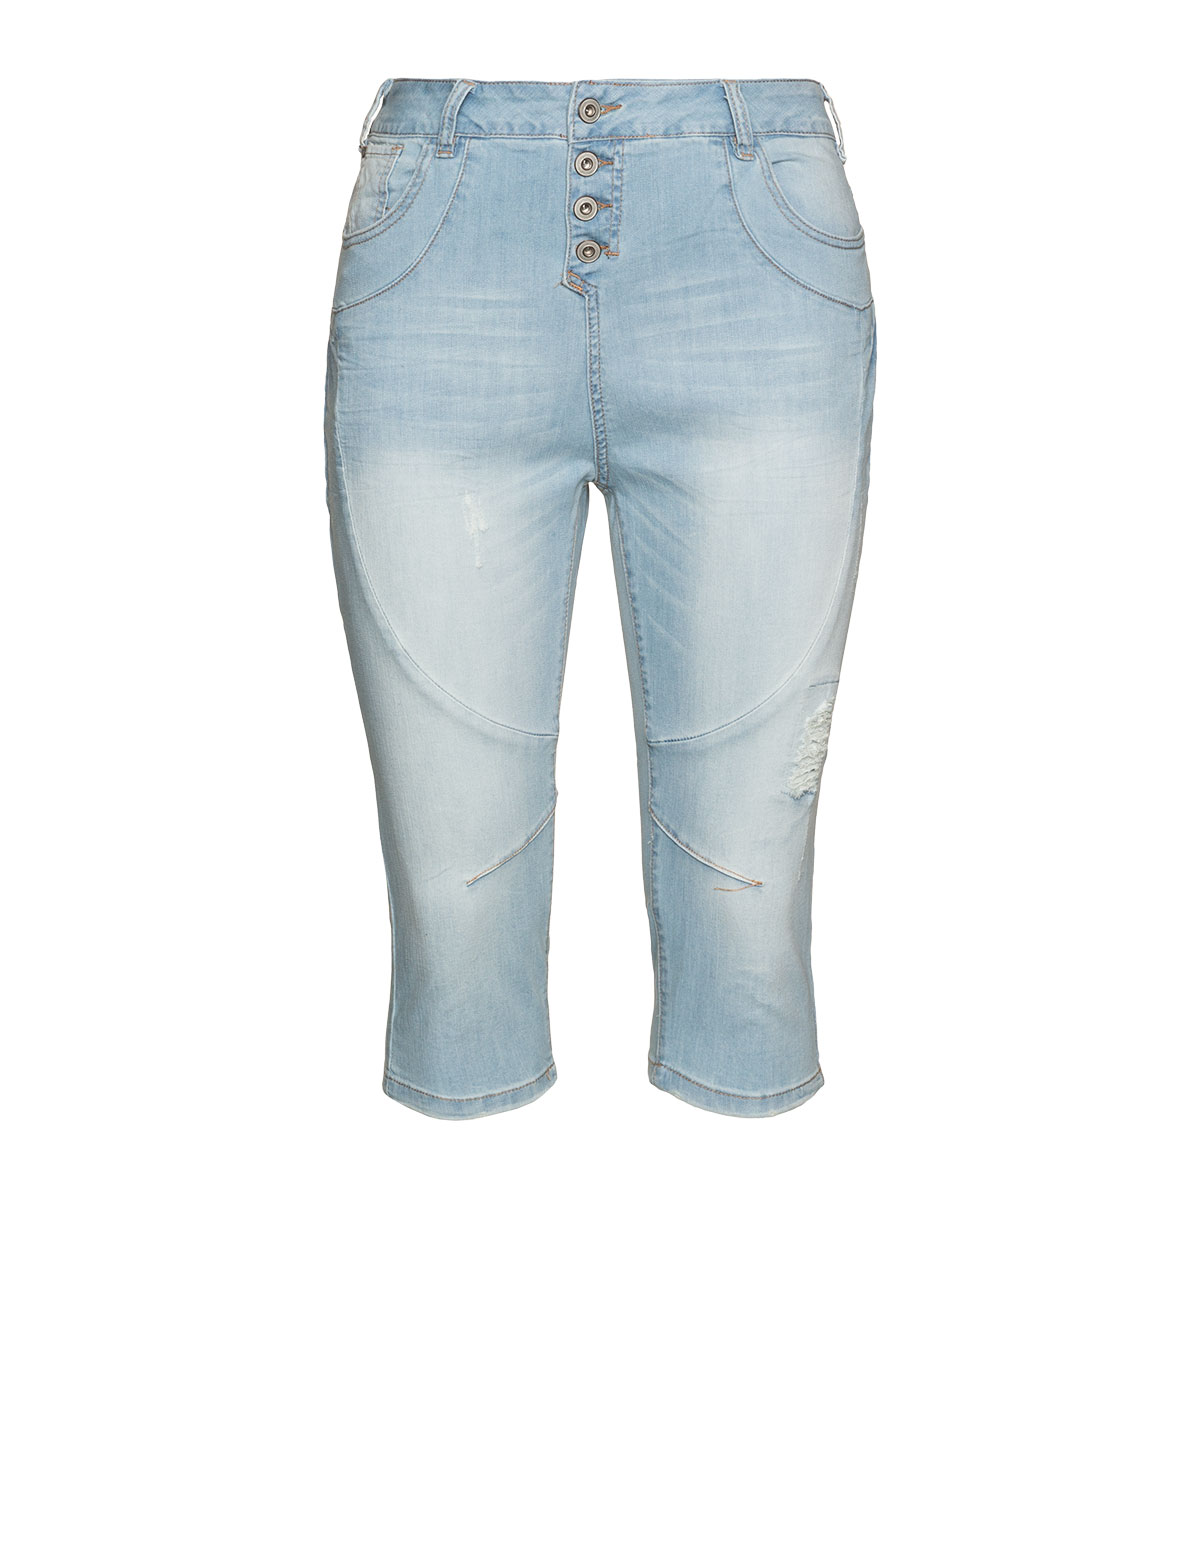 Distressed capri jeans by
Zizzi